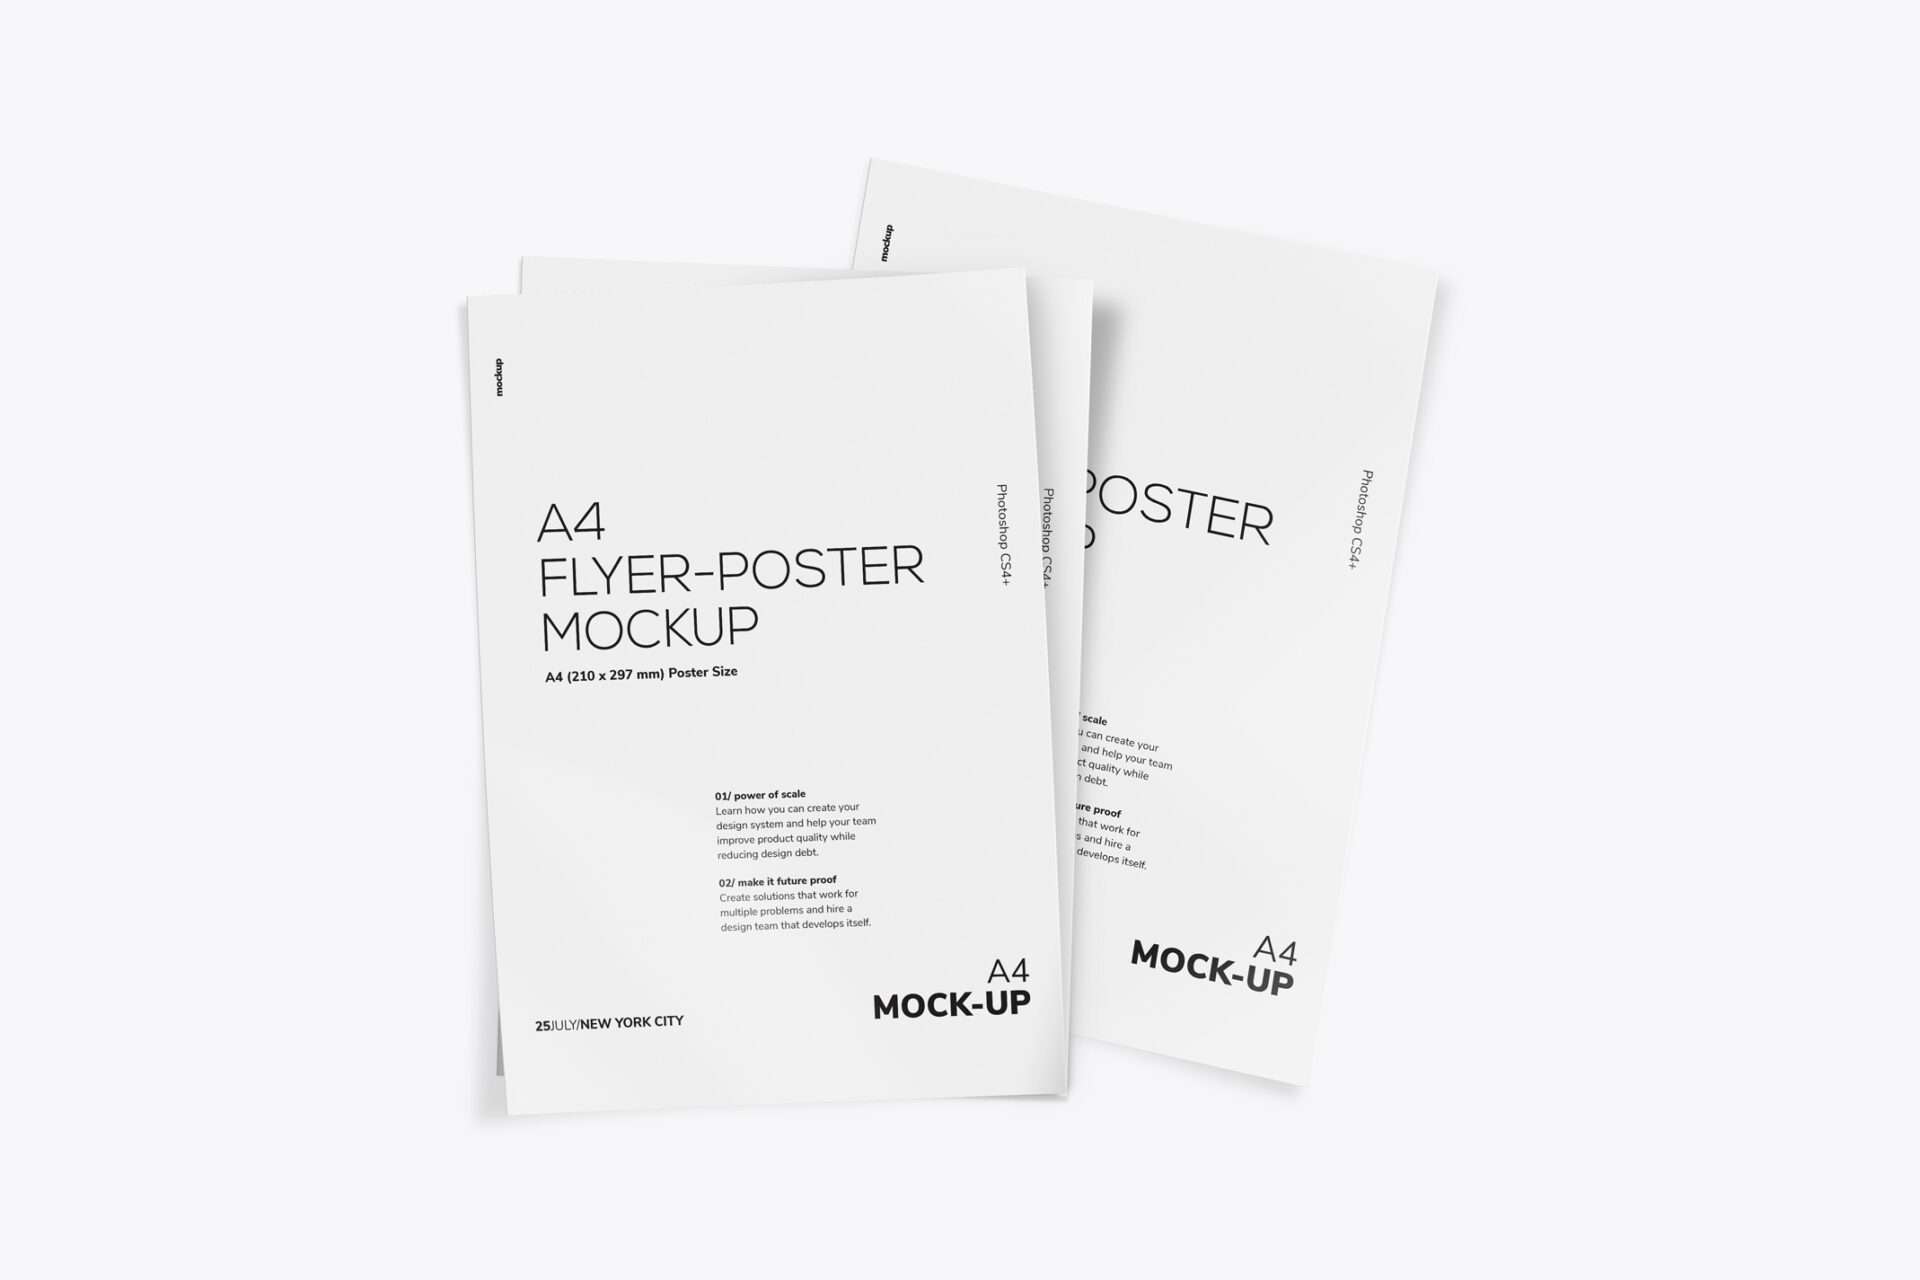 Three A4 Flyer-Poster Mockup